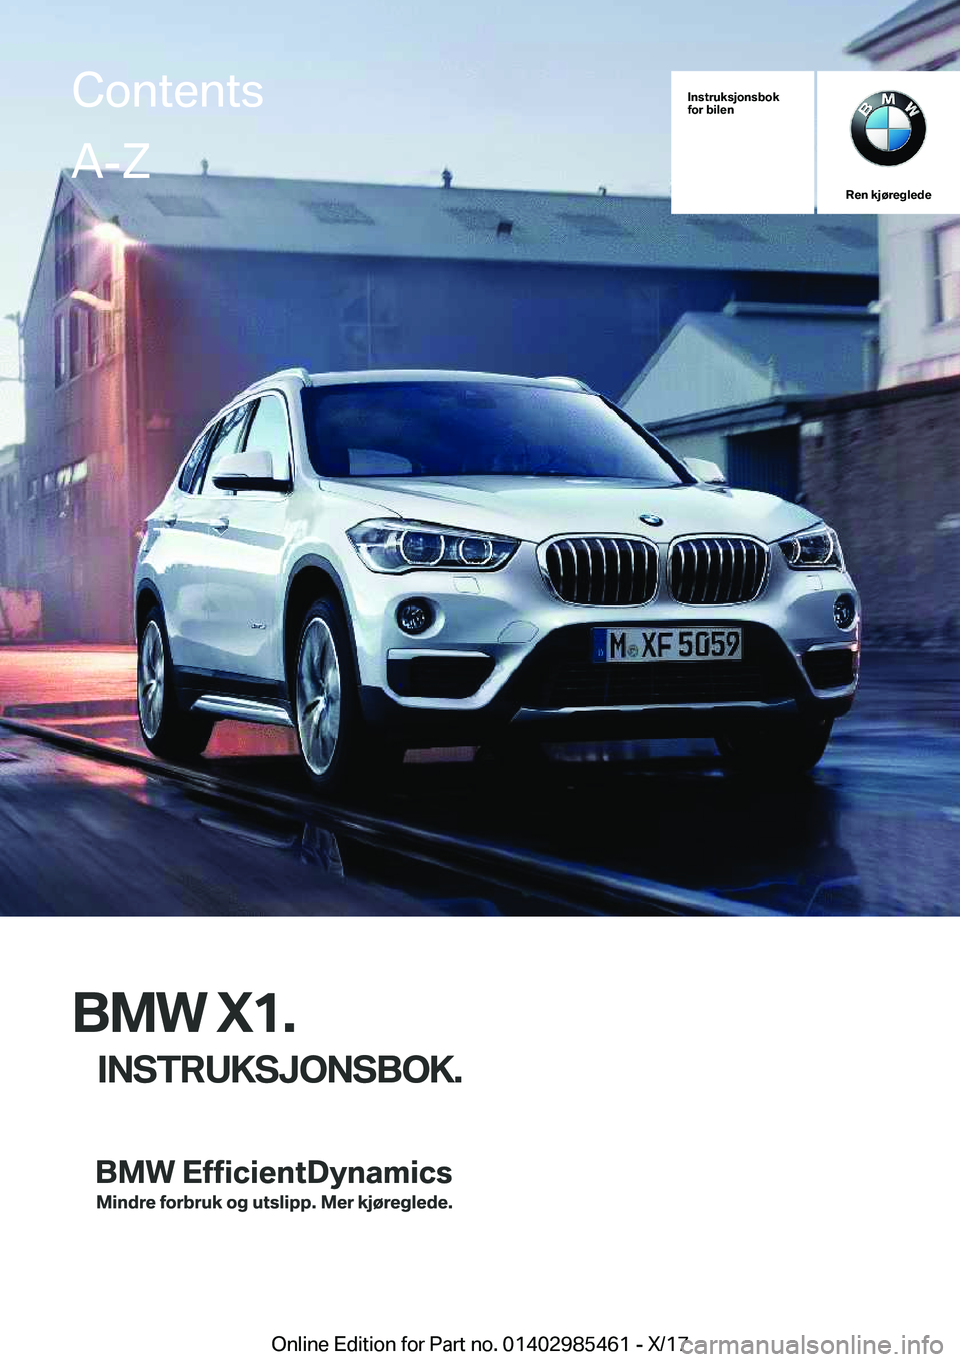 BMW X1 2018  InstruksjonsbØker (in Norwegian) �I�n�s�t�r�u�k�s�j�o�n�s�b�o�k
�f�o�r��b�i�l�e�n
�R�e�n��k�j�